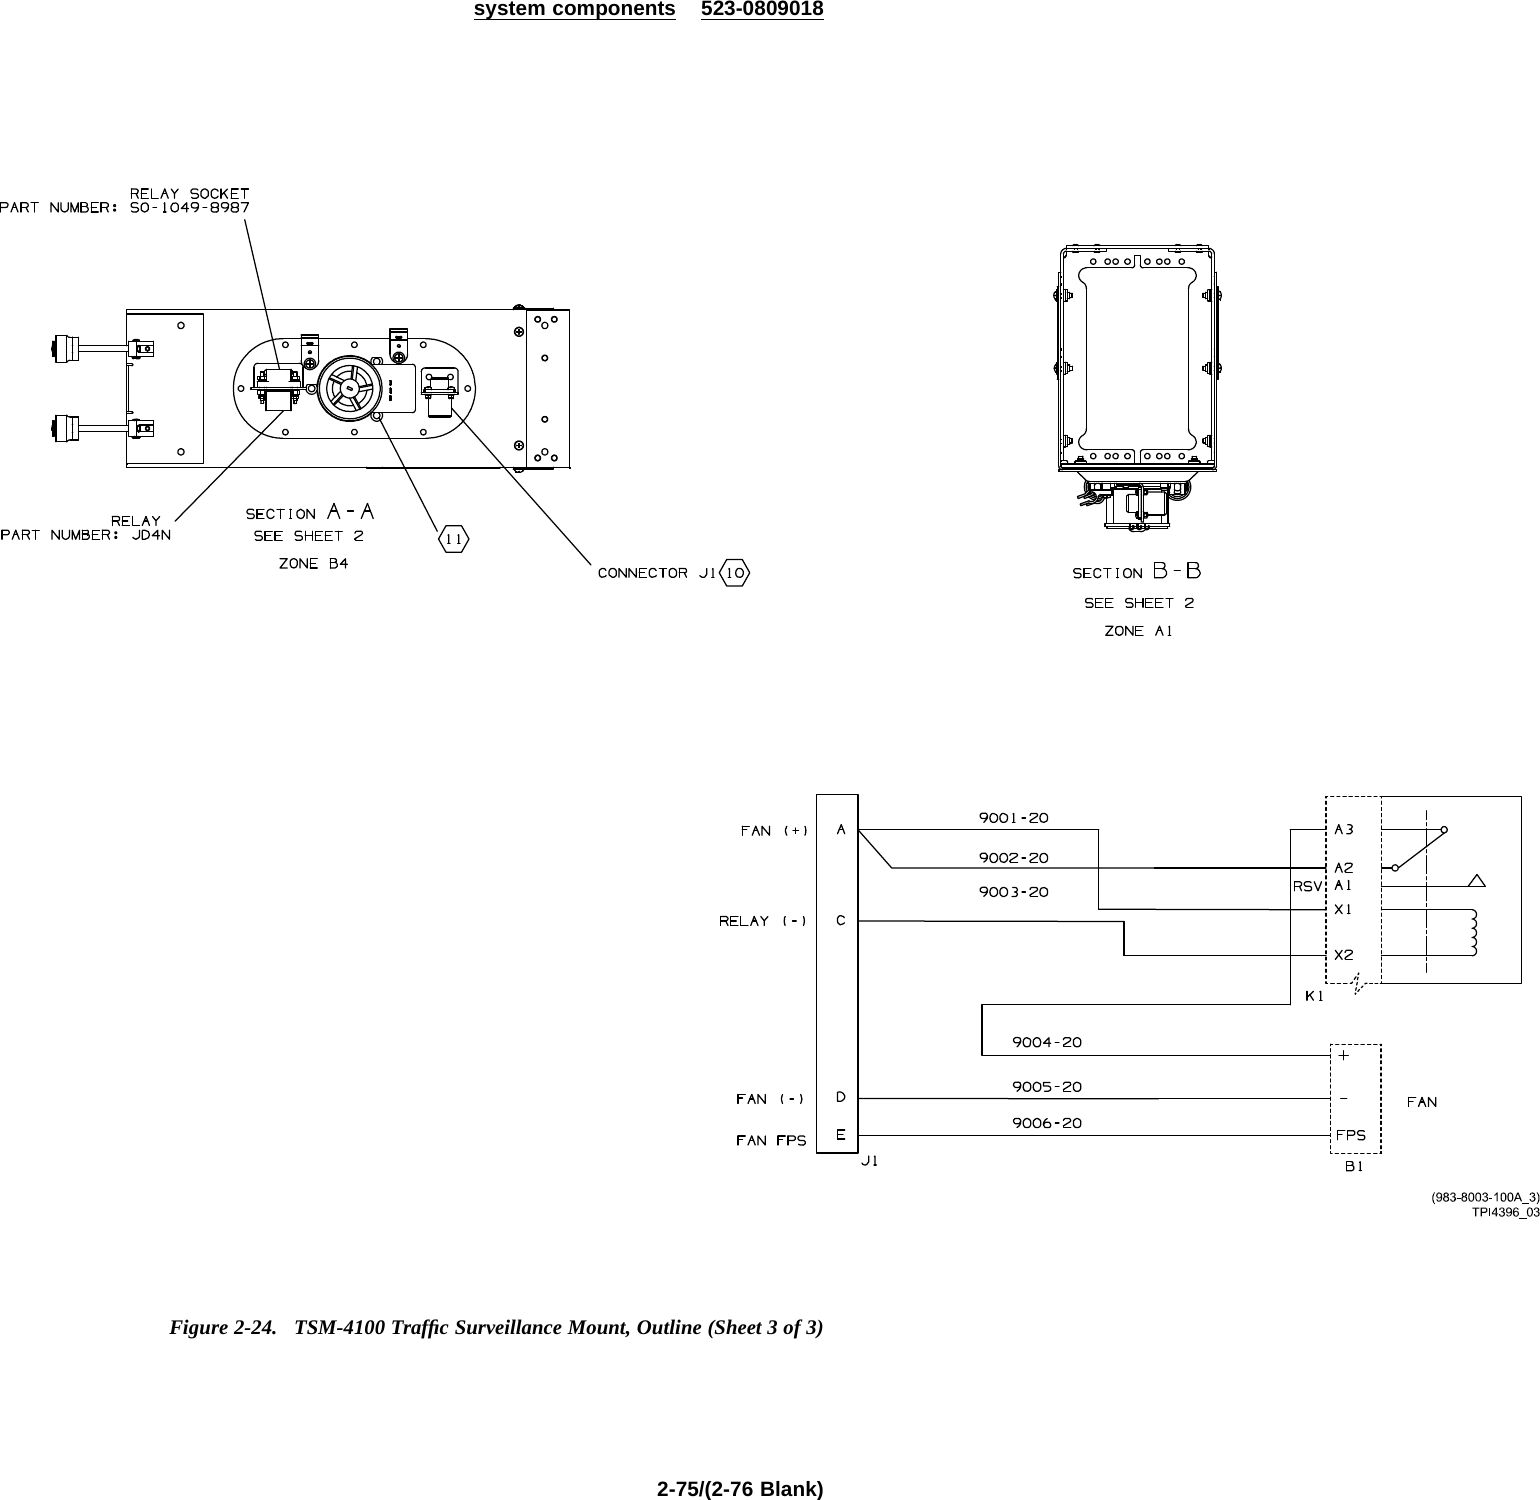 system components 523-0809018Figure 2-24. TSM-4100 Trafﬁc Surveillance Mount, Outline (Sheet 3 of 3)2-75/(2-76 Blank)